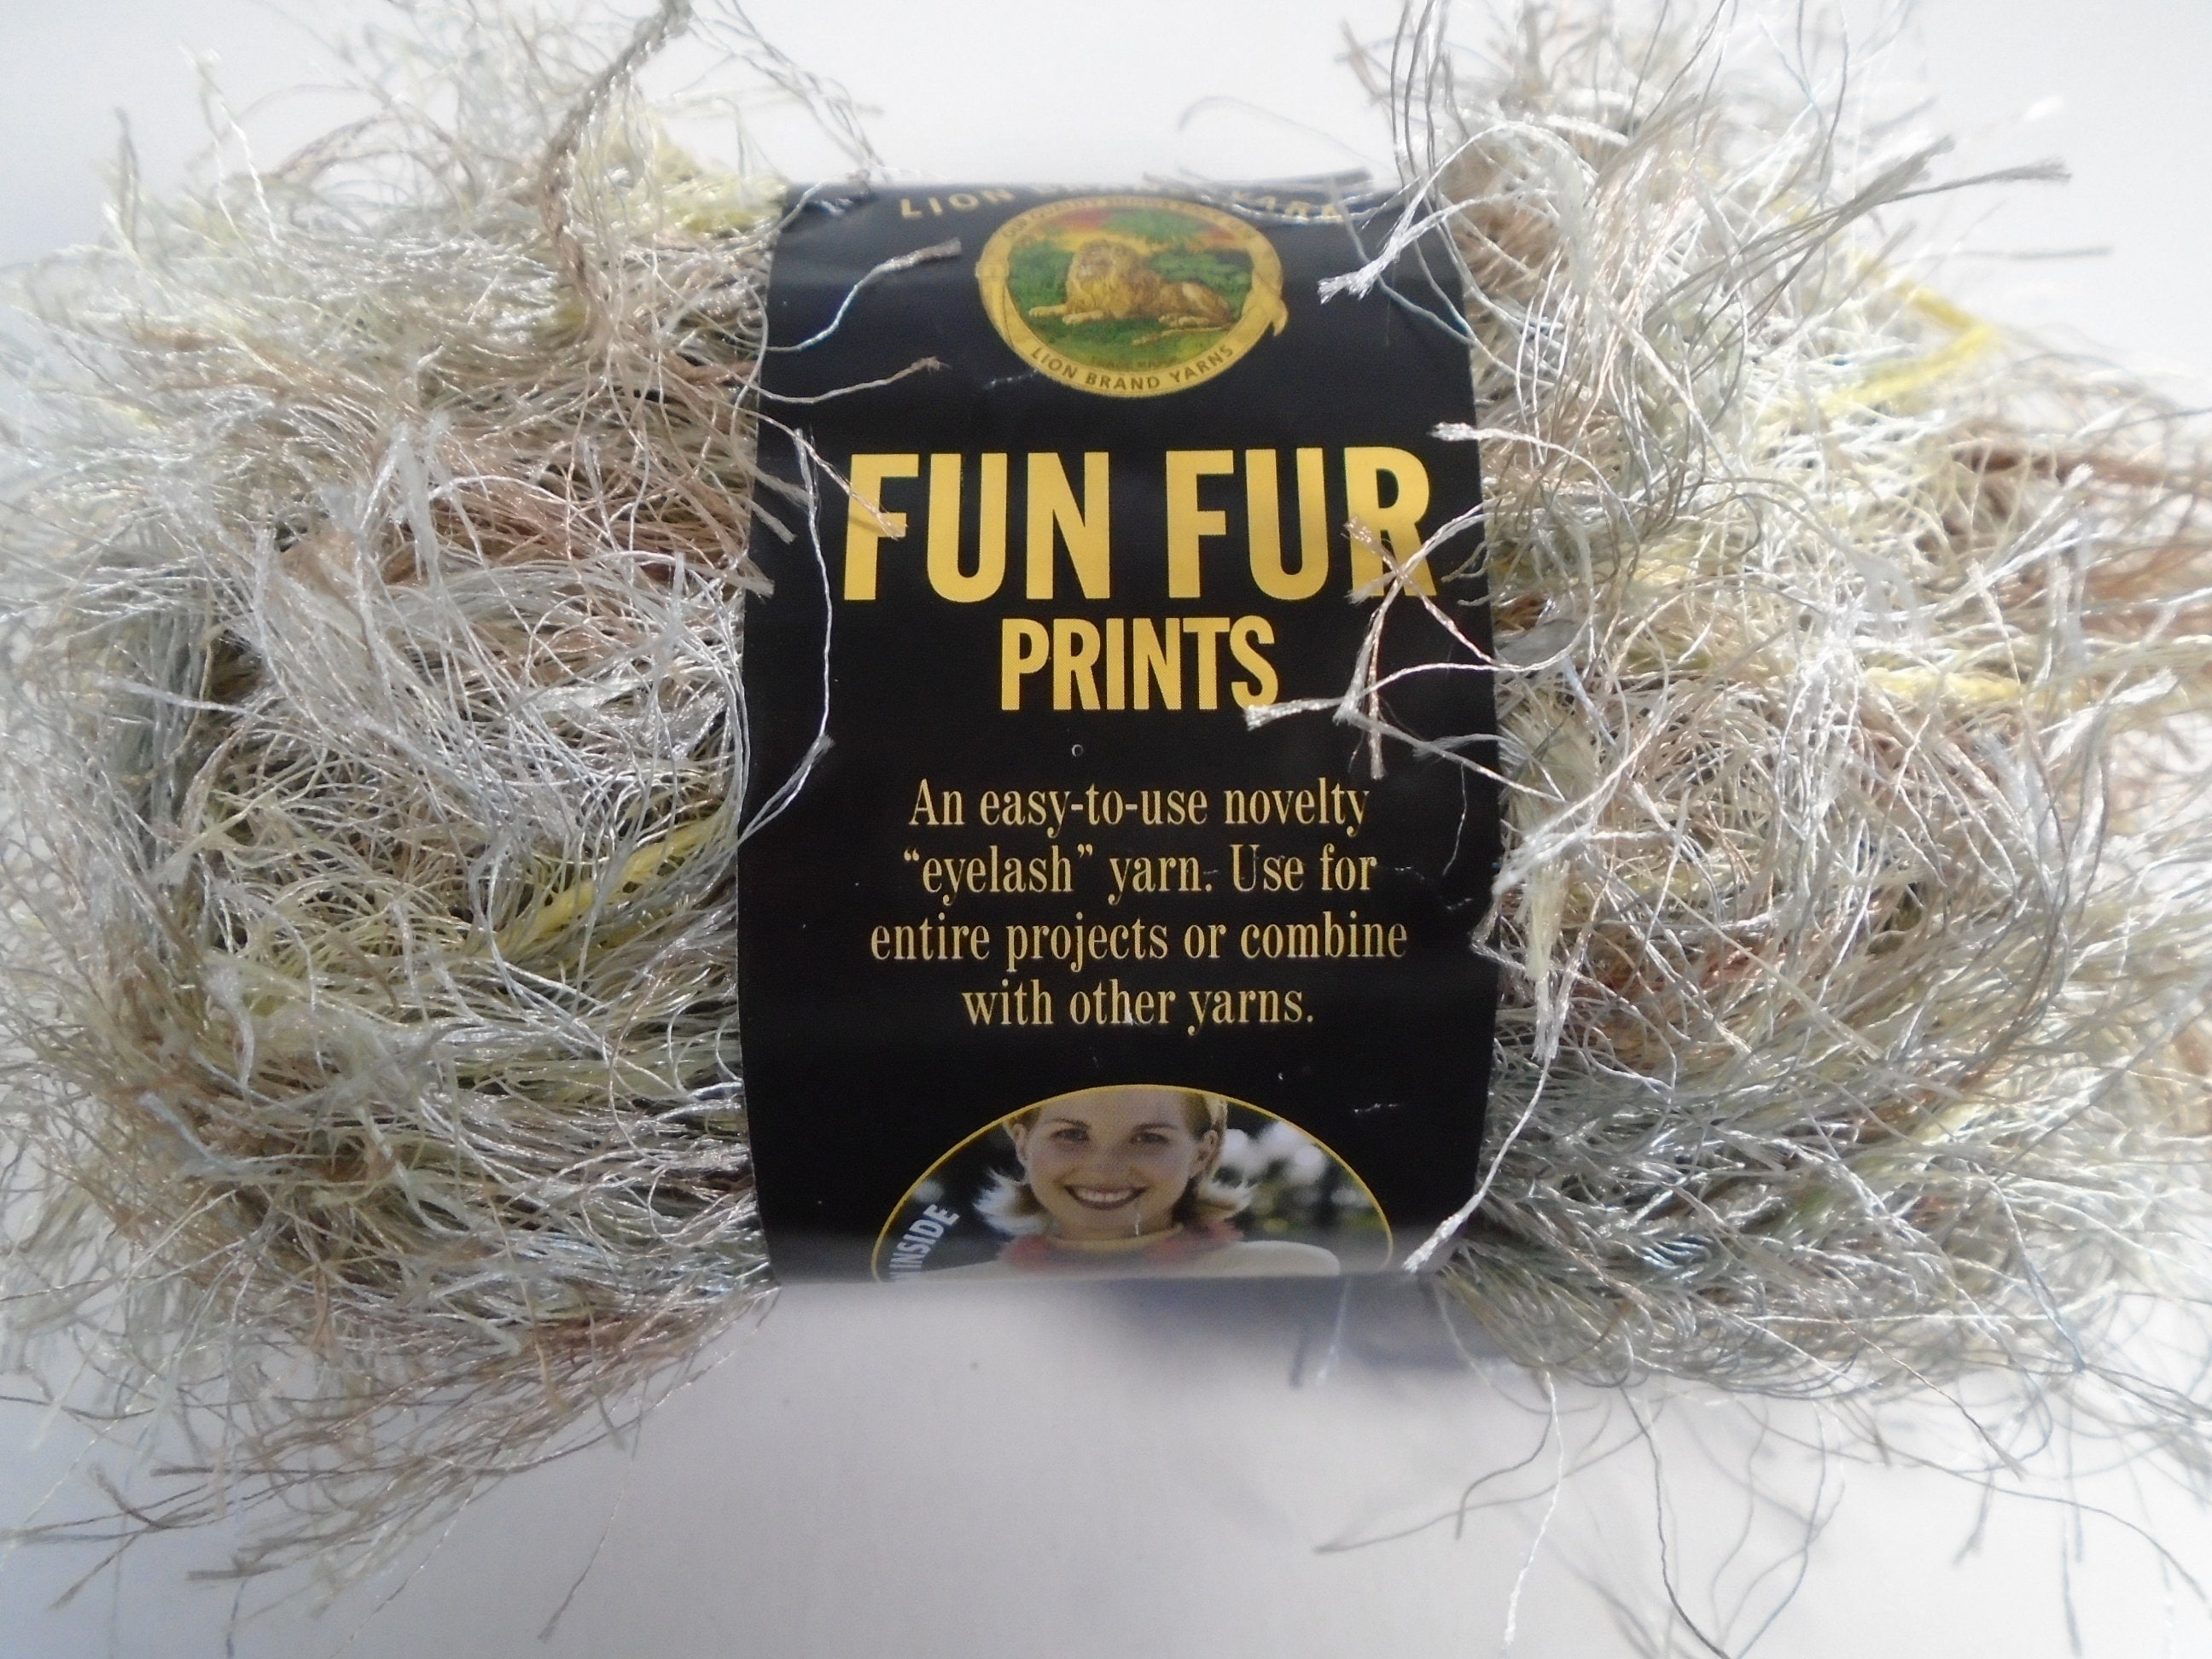 Fun Fur Prints Yarn Lion Brand Lot of 4 Skeins Eyelash Faux Fur Yarn Sand  Stone Color 